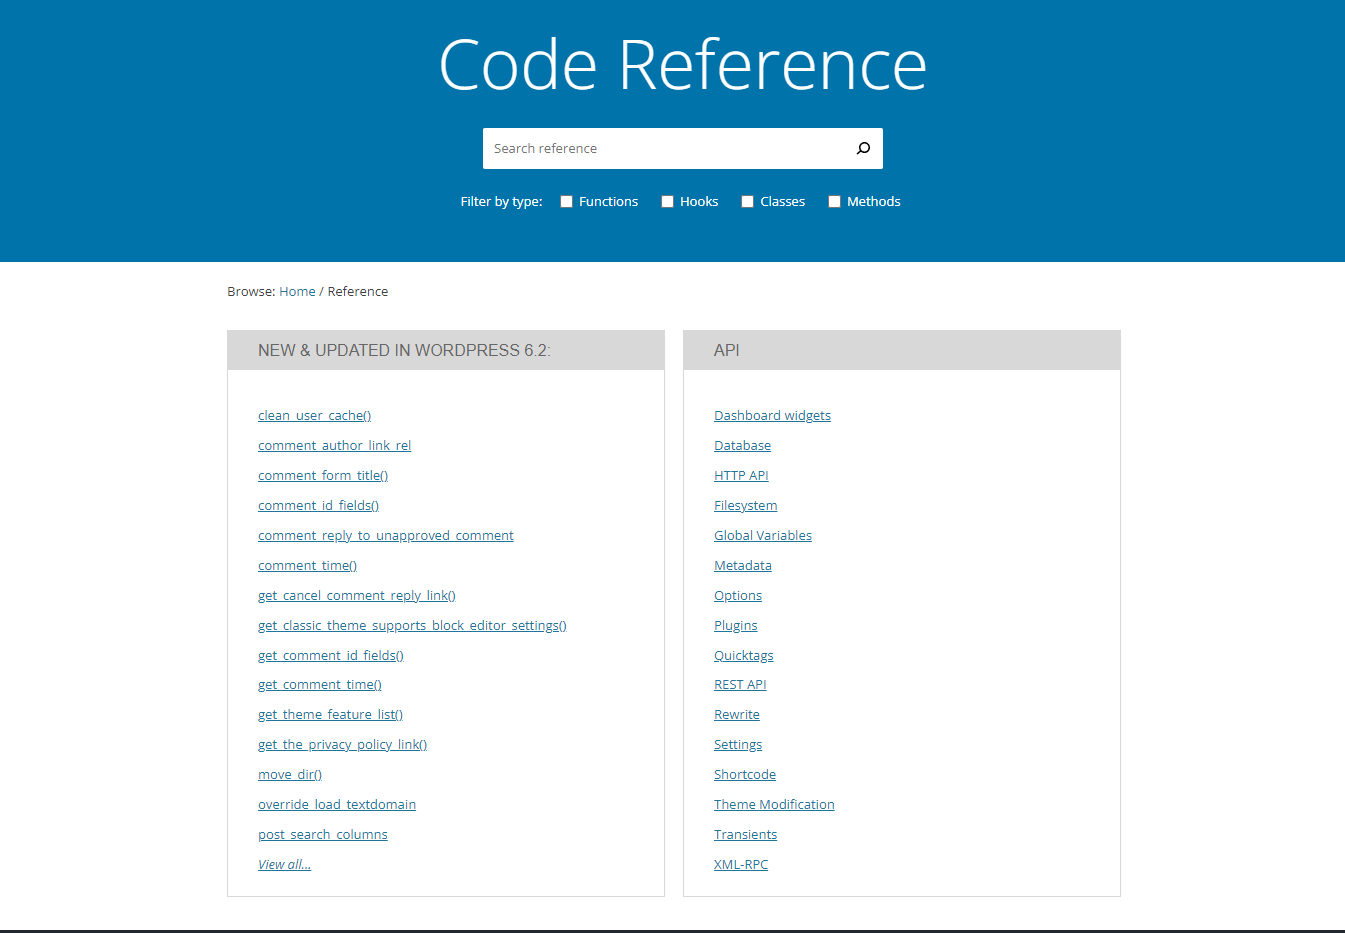 Homepage of the WordPress Code Reference Handbook